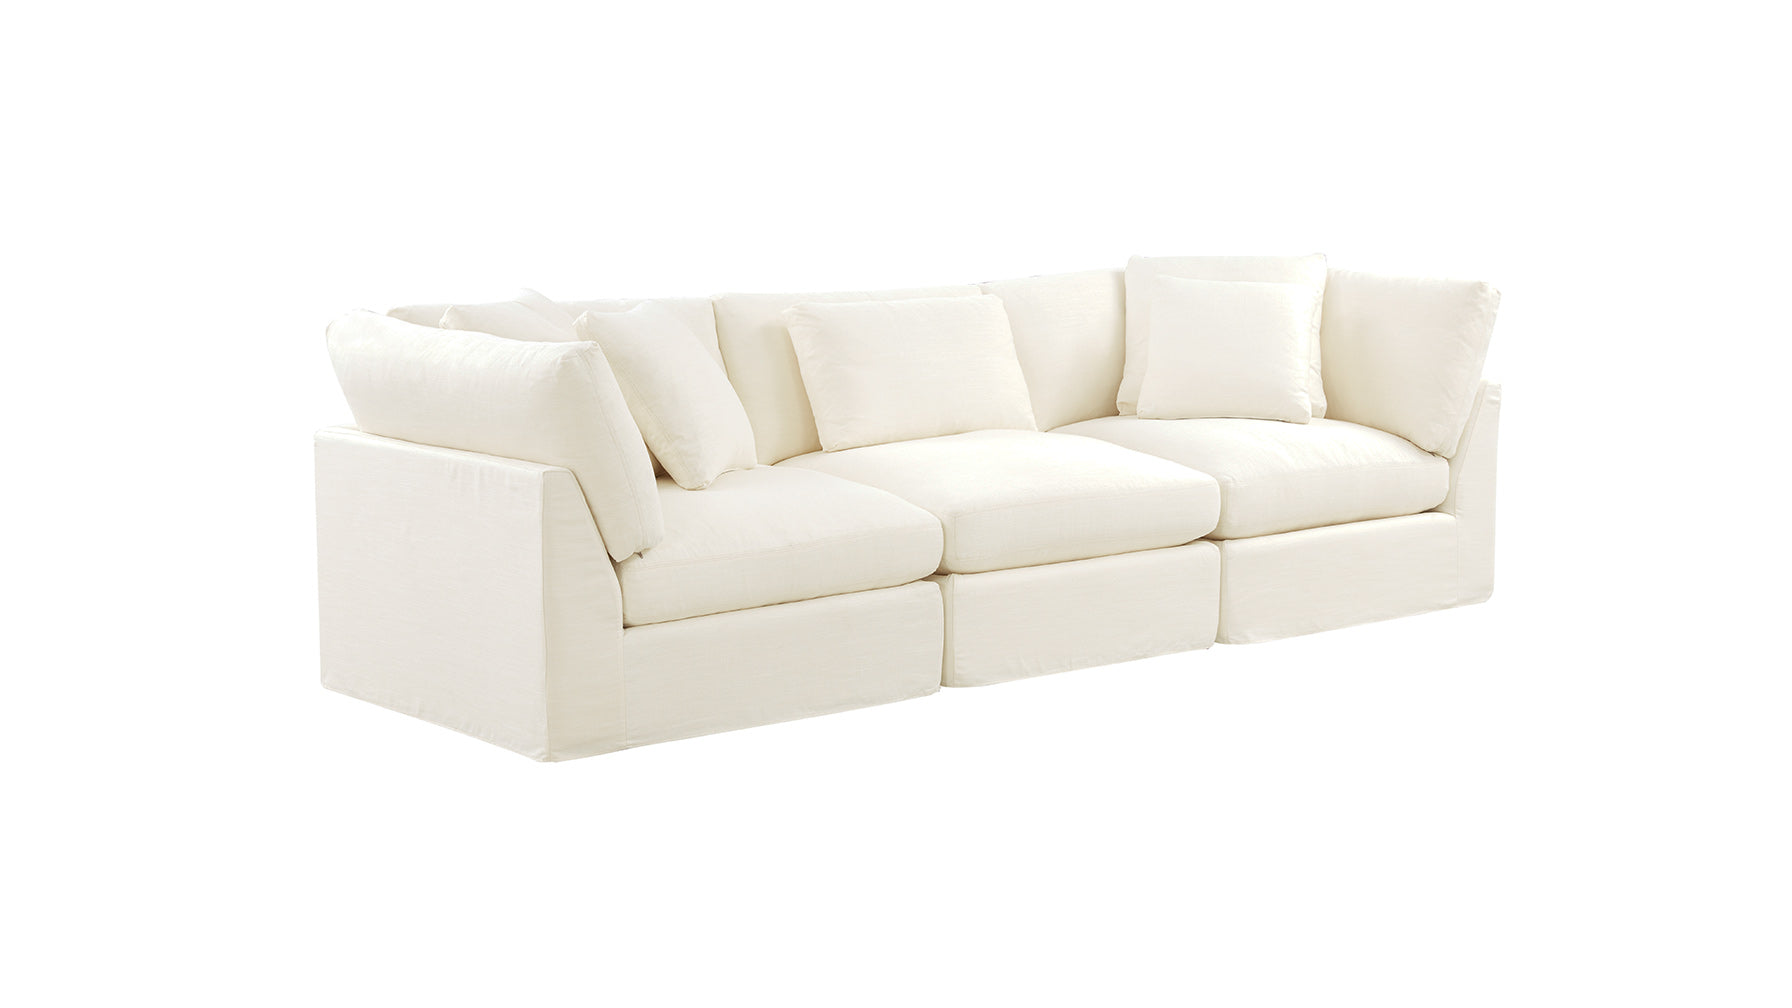 Get Together™ 3-Piece Modular Sofa, Large, Cream Linen - Image 3